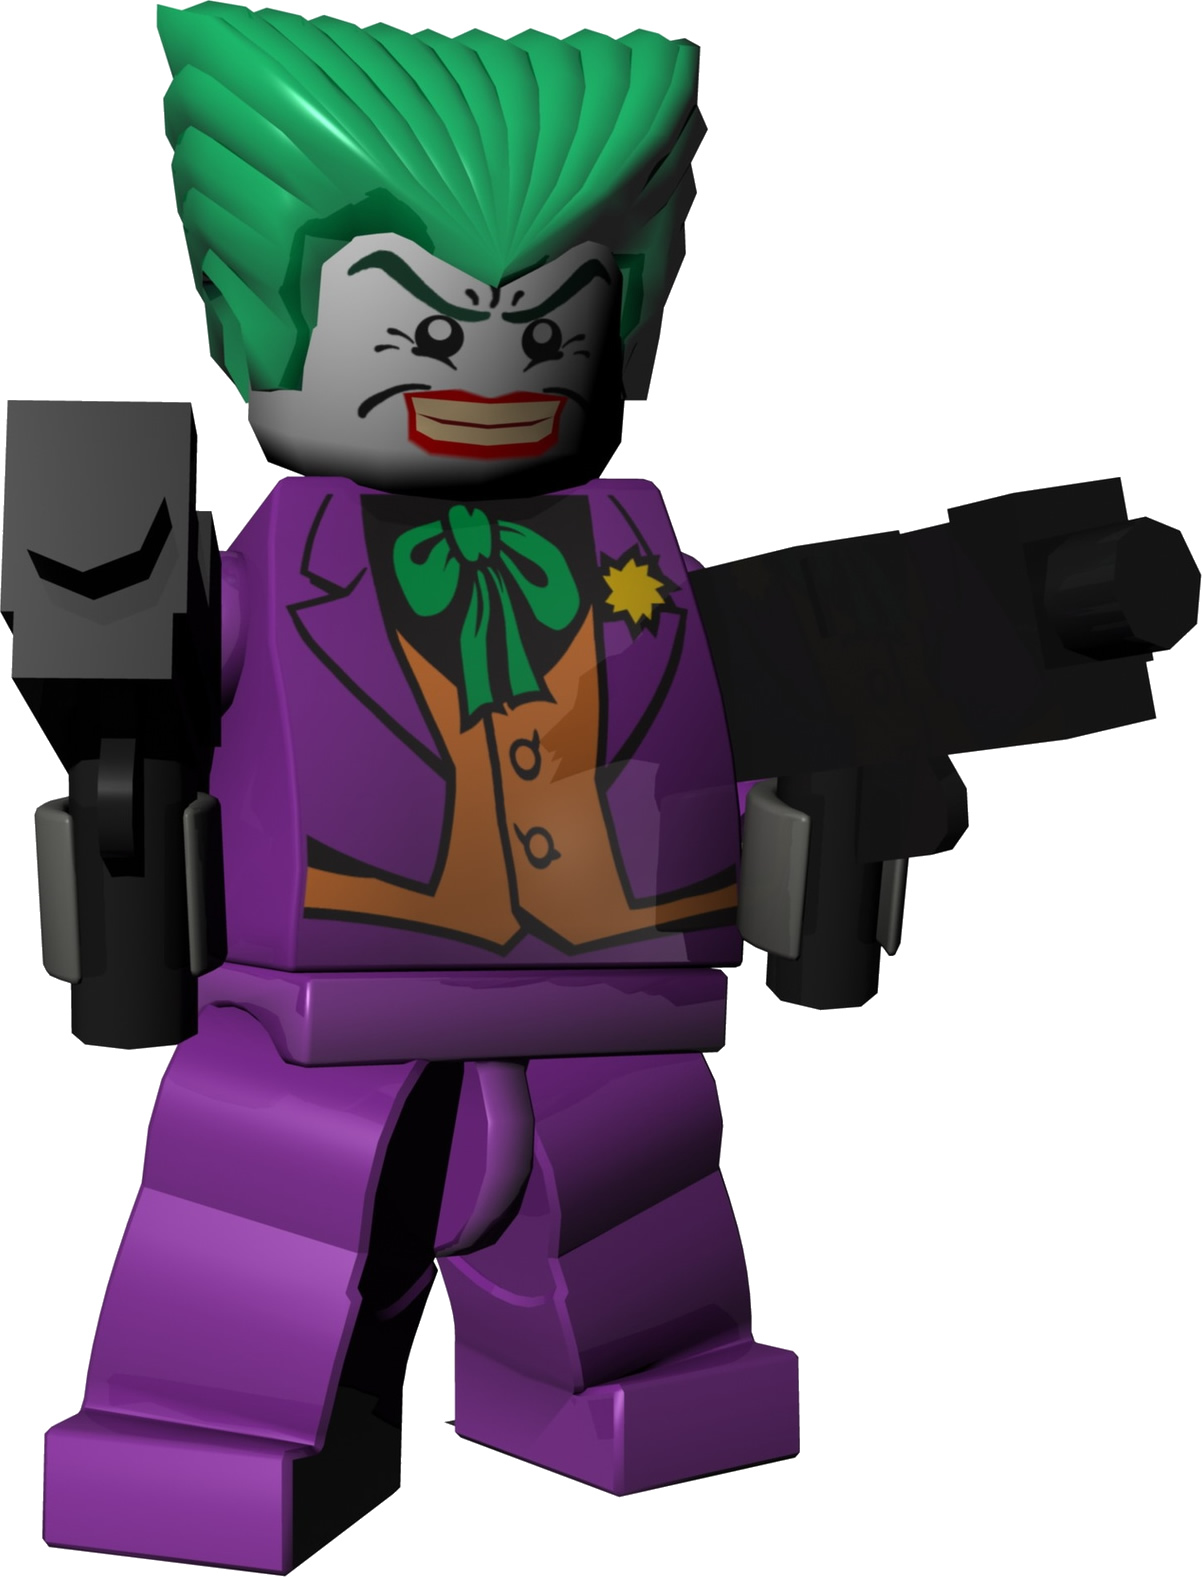 Image - The Joker.jpg - The Lego Batman Wiki